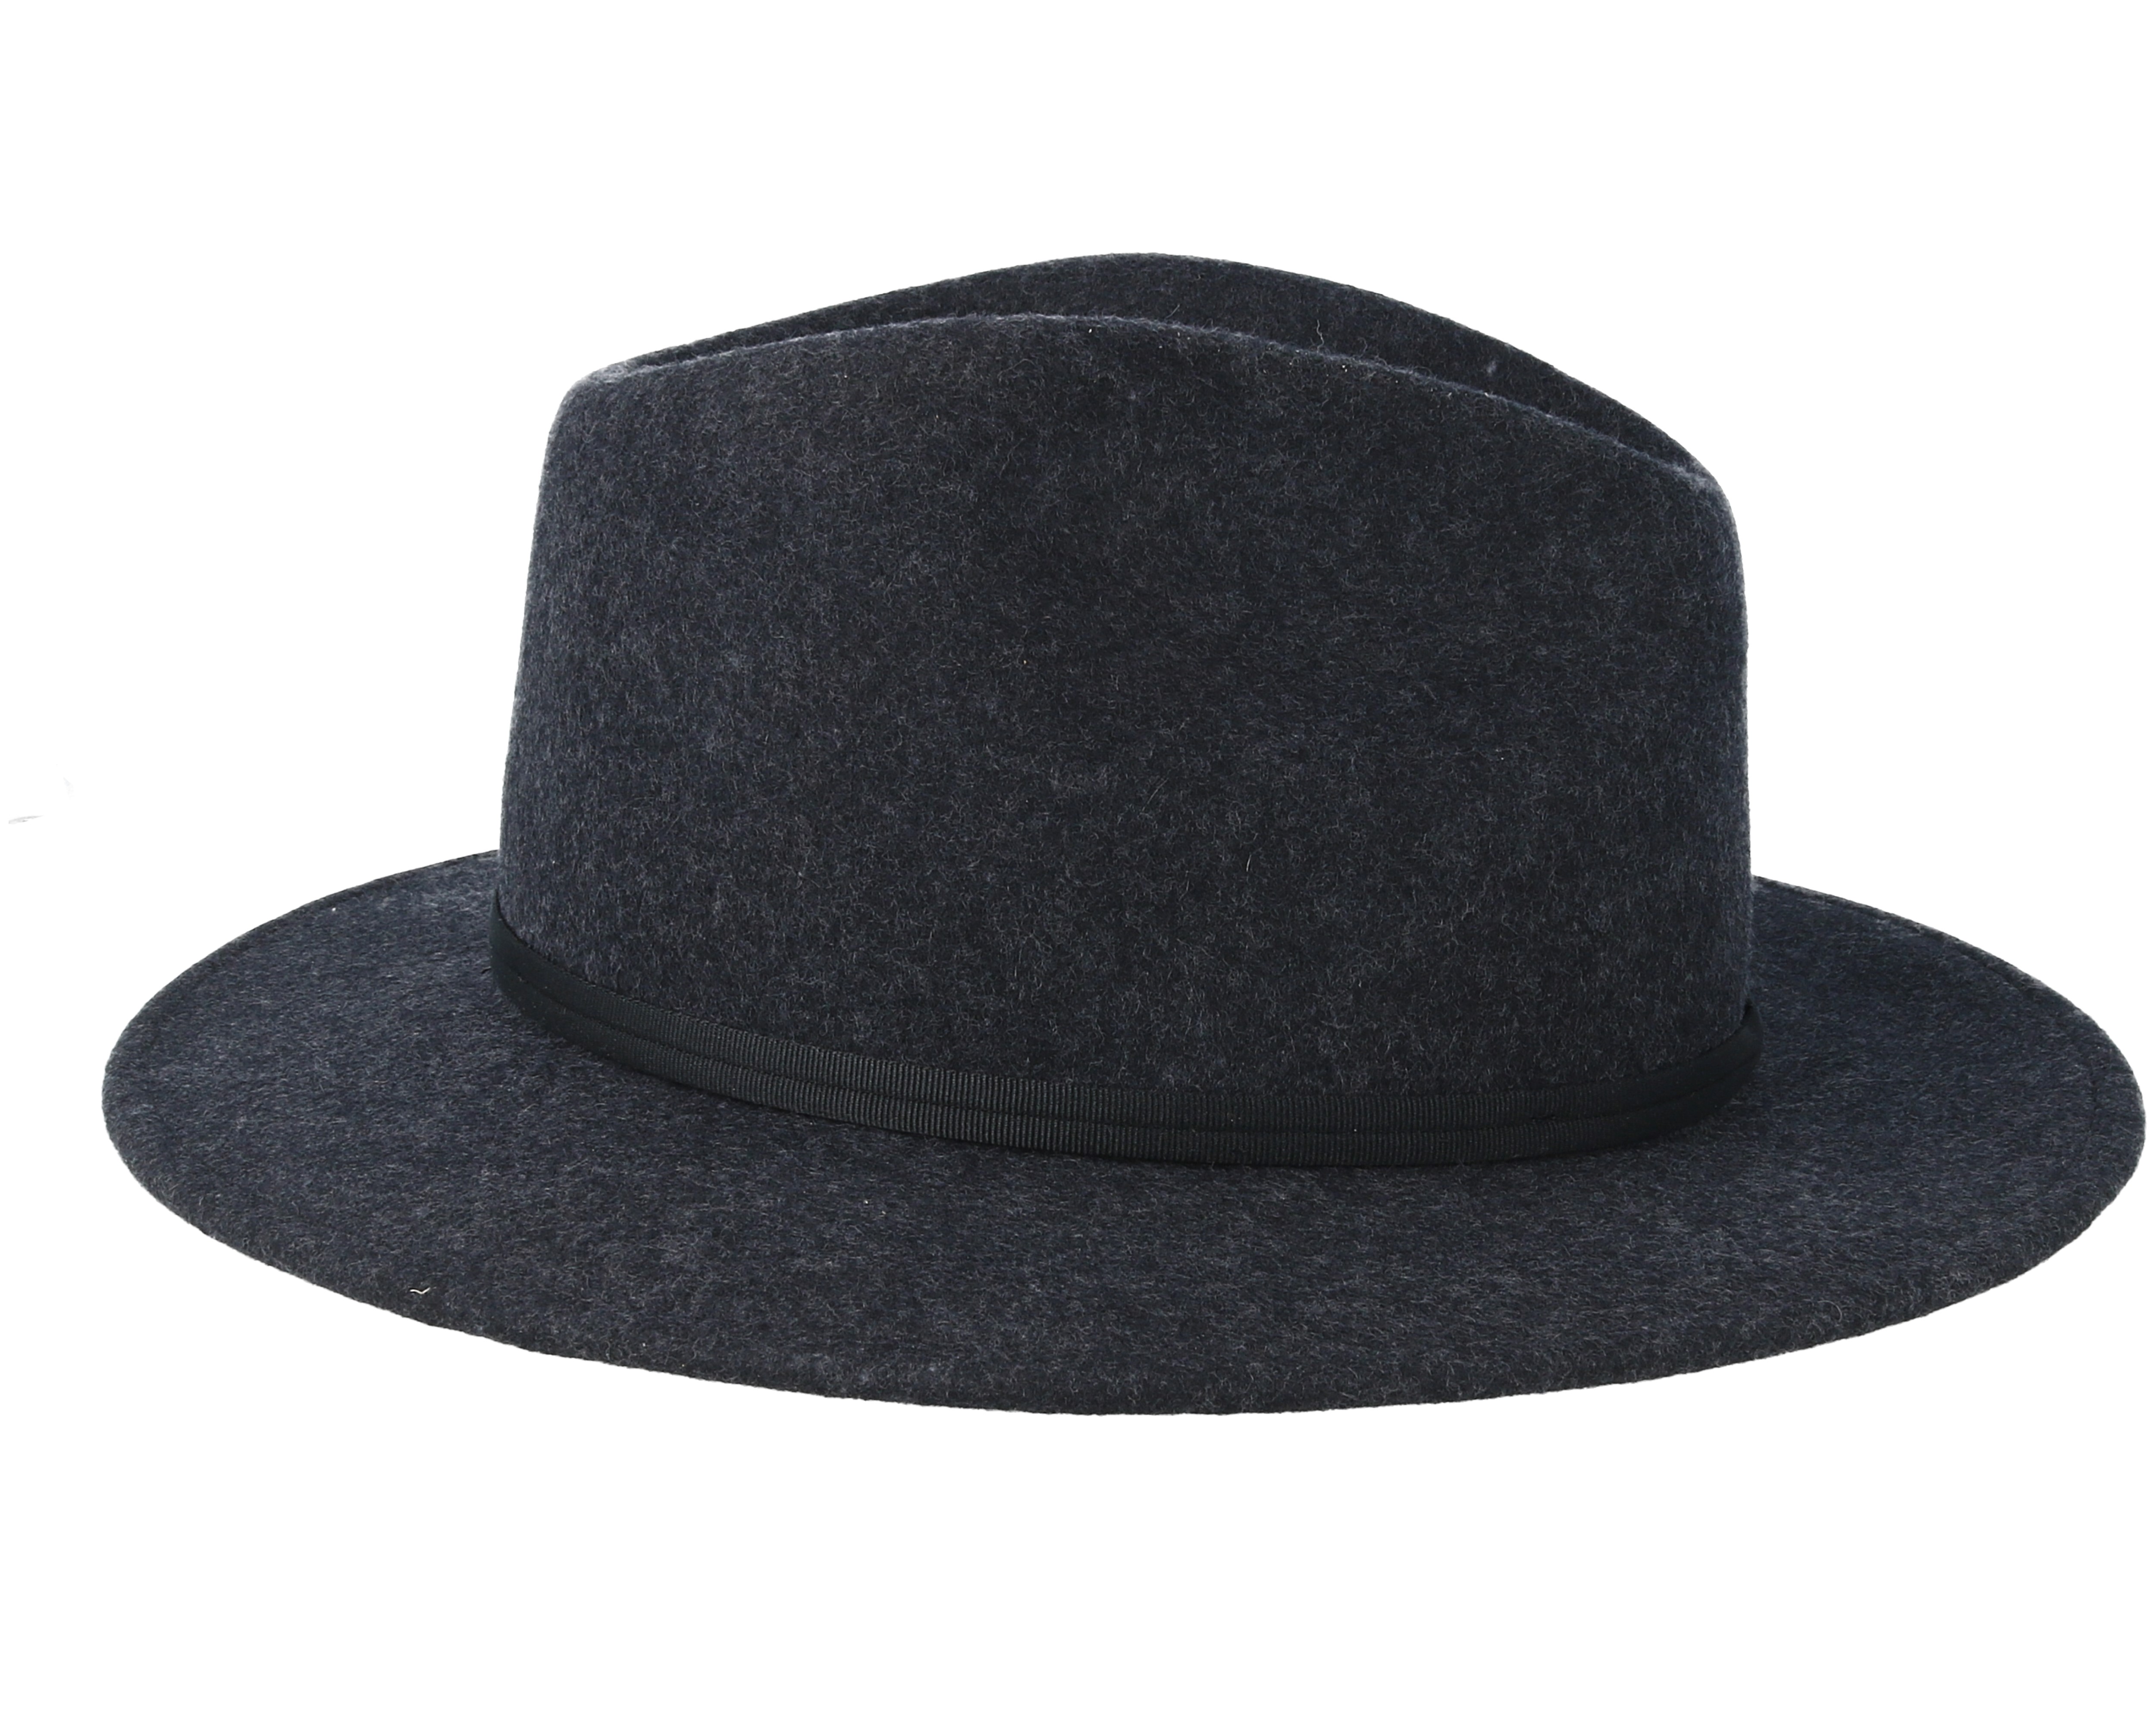 Coleman Black Fedora - Brixton hats | Hatstore.co.uk